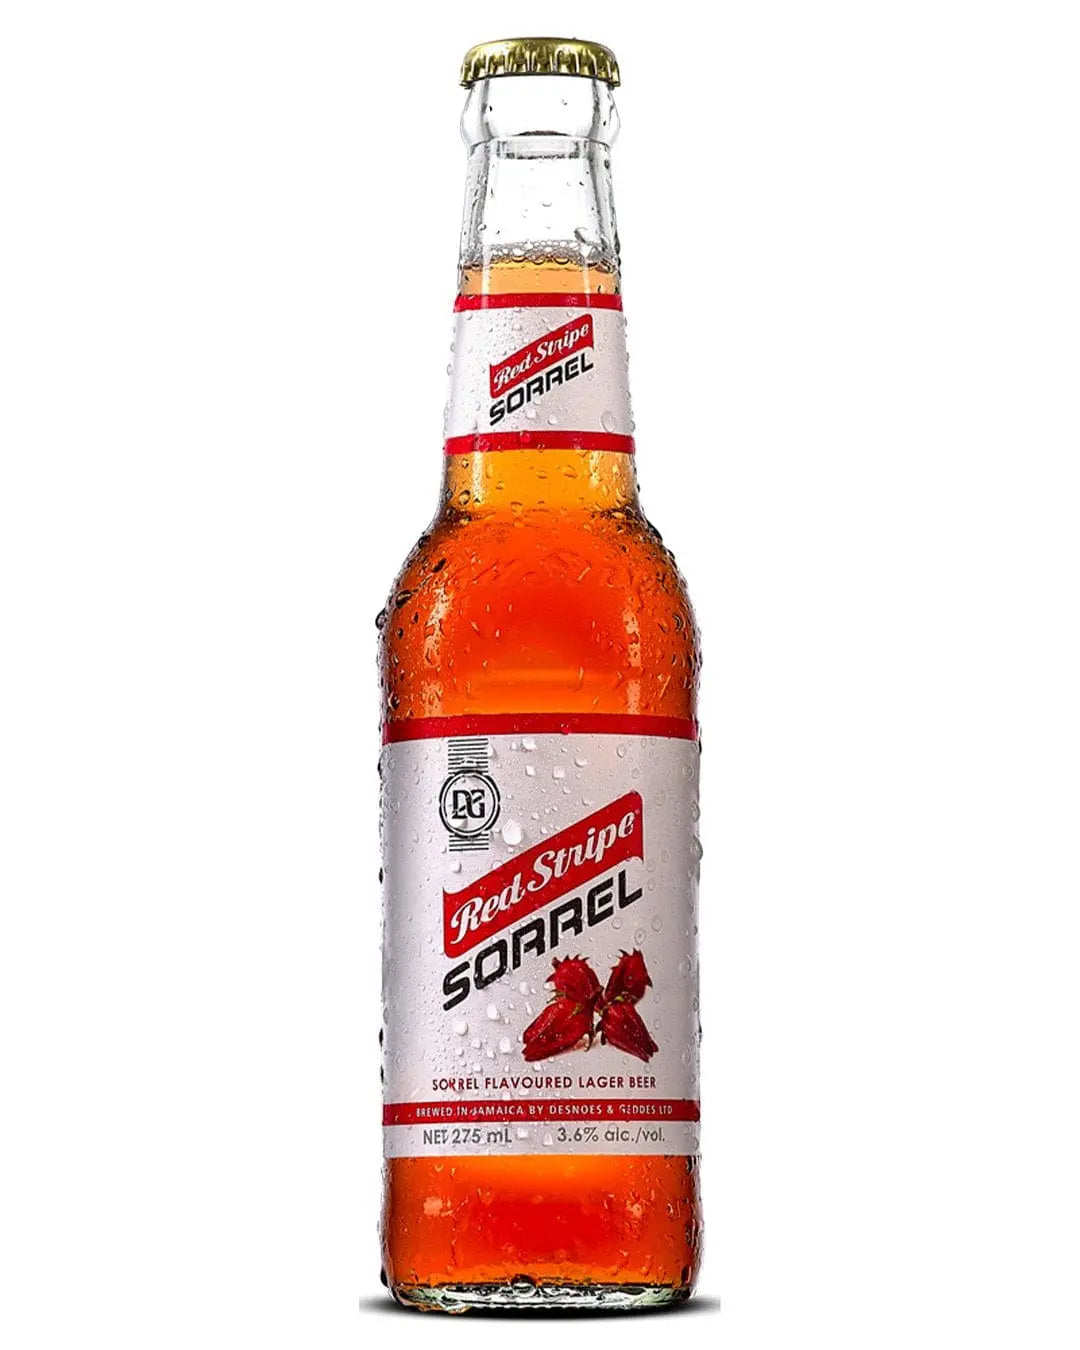 Red Stripe Sorrel Premium Lager, 275 ml Beer